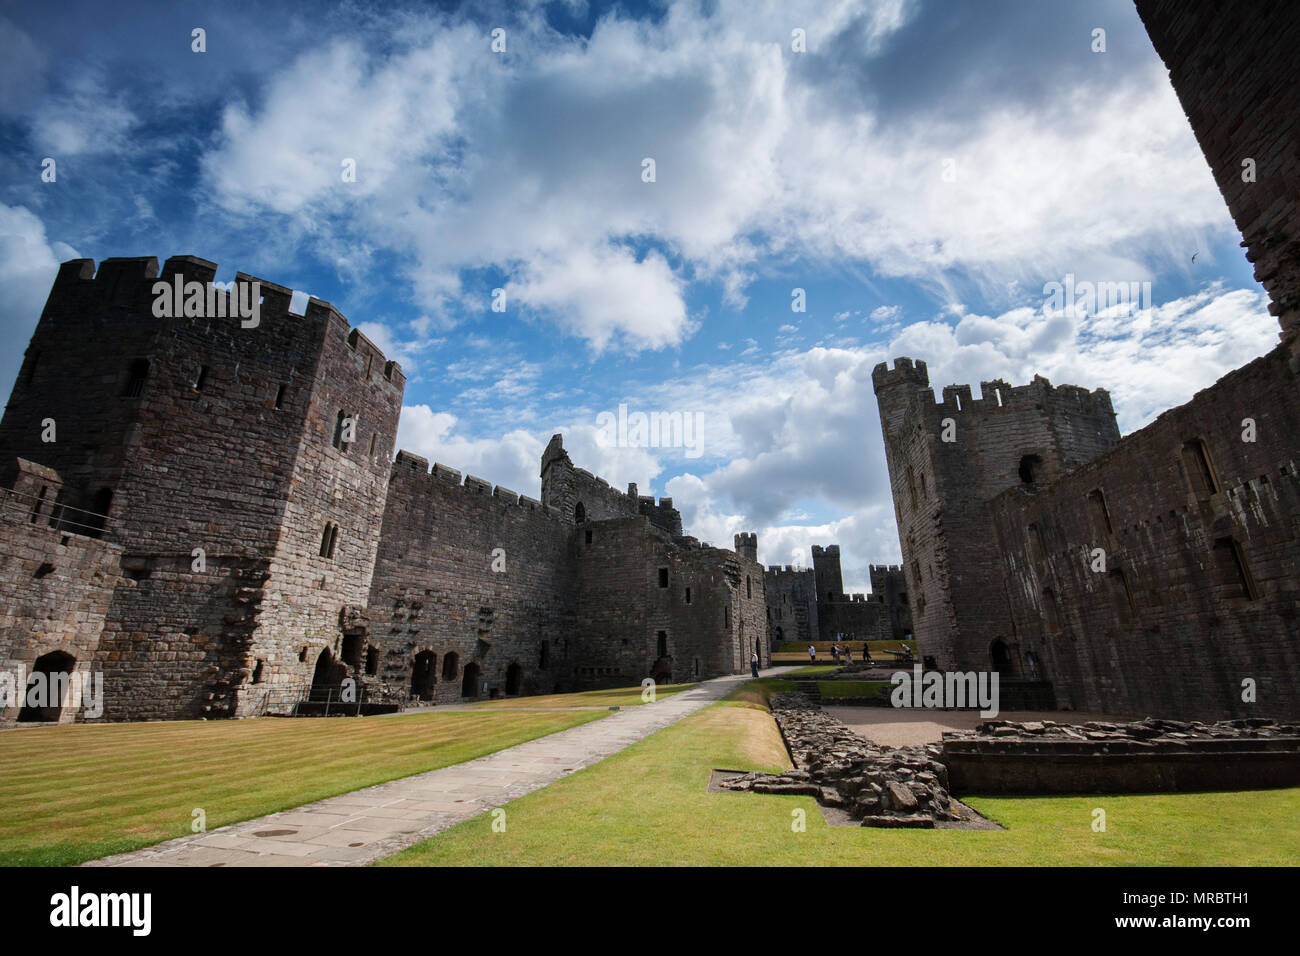 Inner courtyard of Caernarfon castle in North Wales, UK. Stock Photo